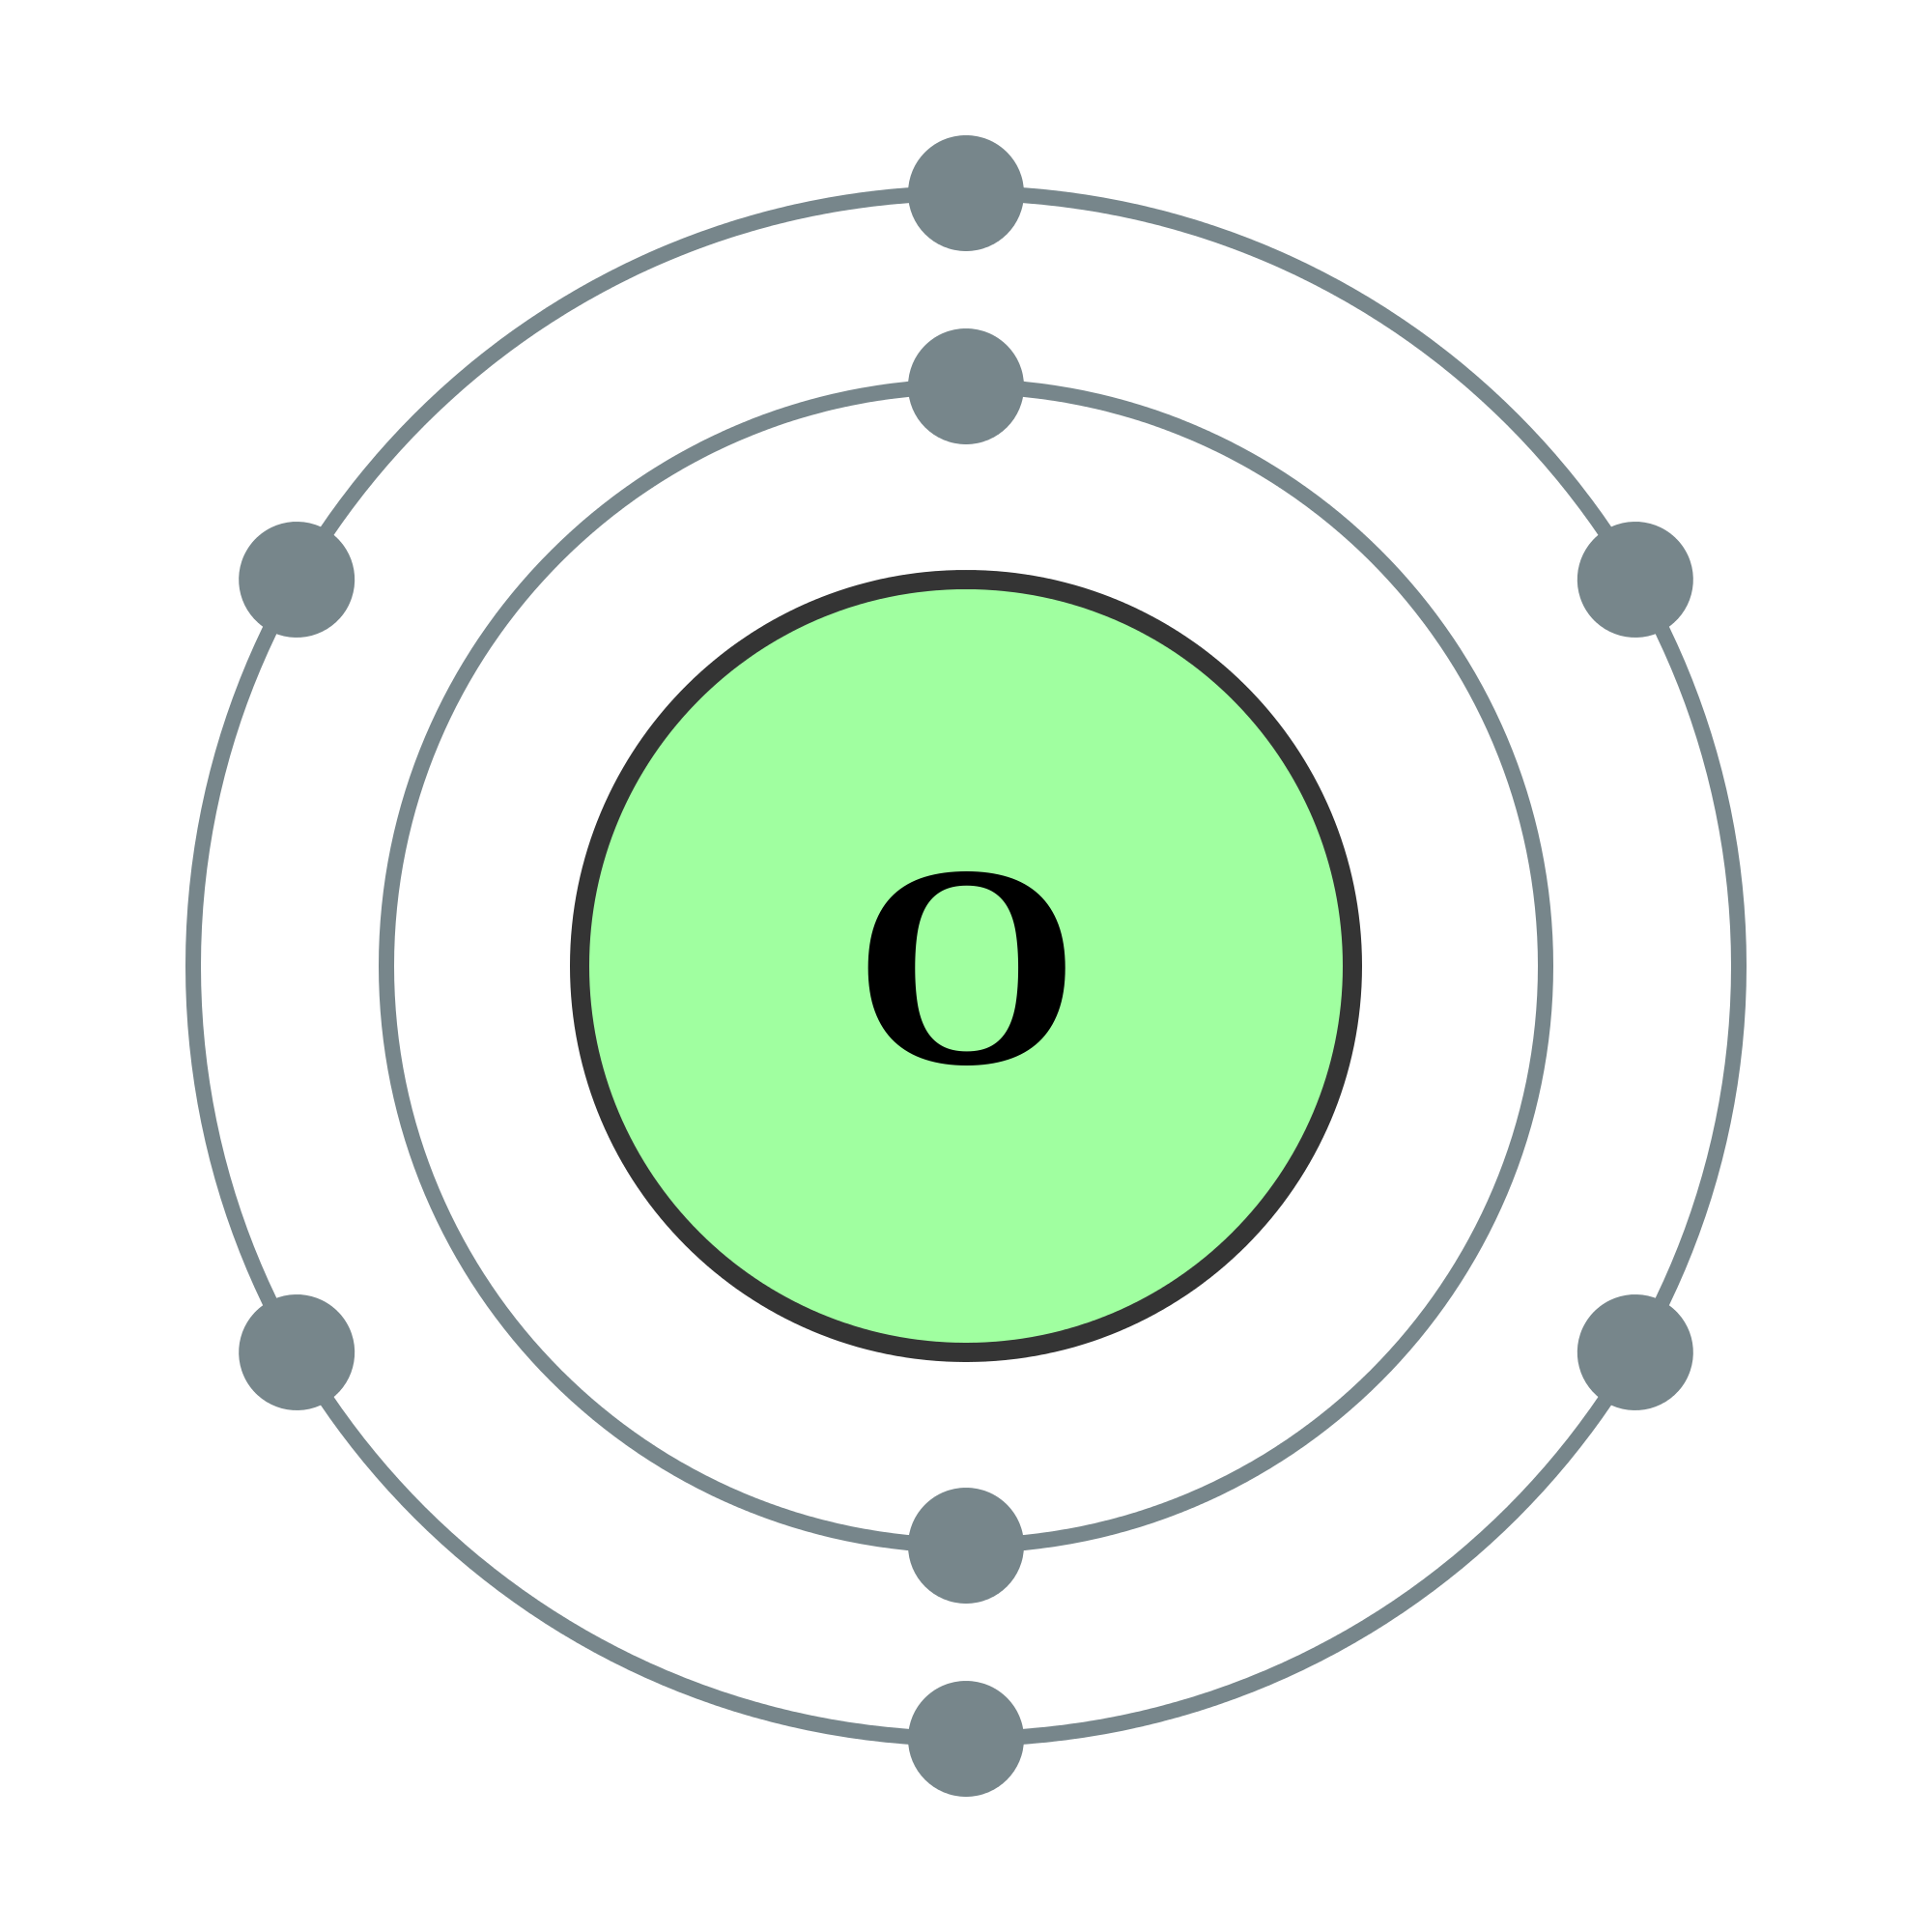 Oxygen atom